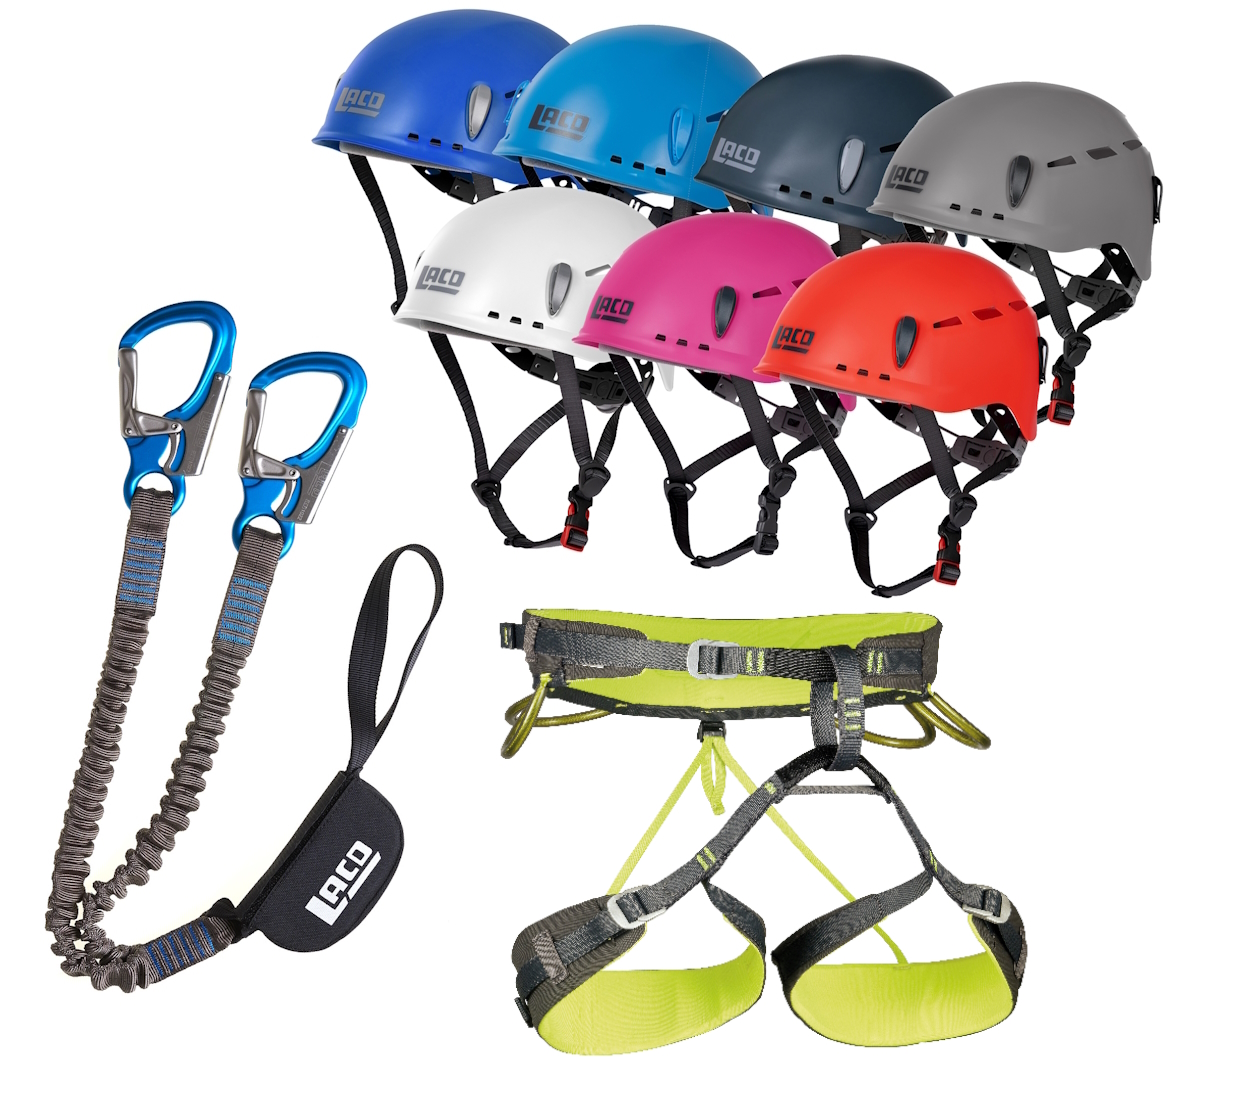 Klettersteigset LACD Pro Evo + Gurt Camp Energy + Helm Protector 2.0